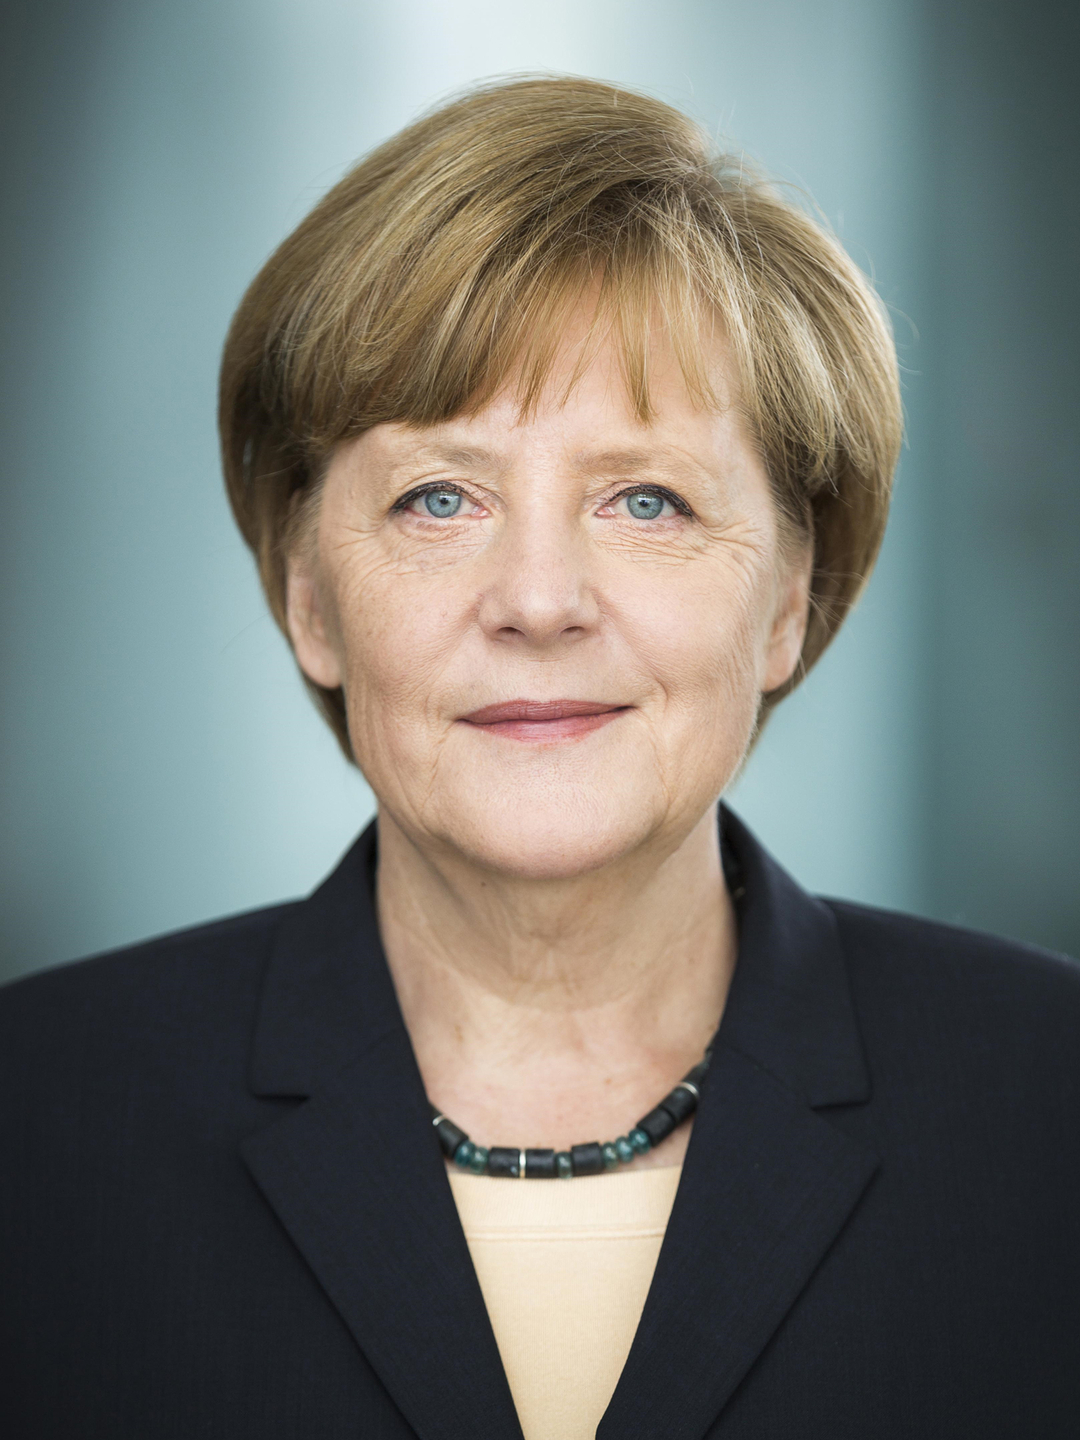 Angela Merkel does she have kids